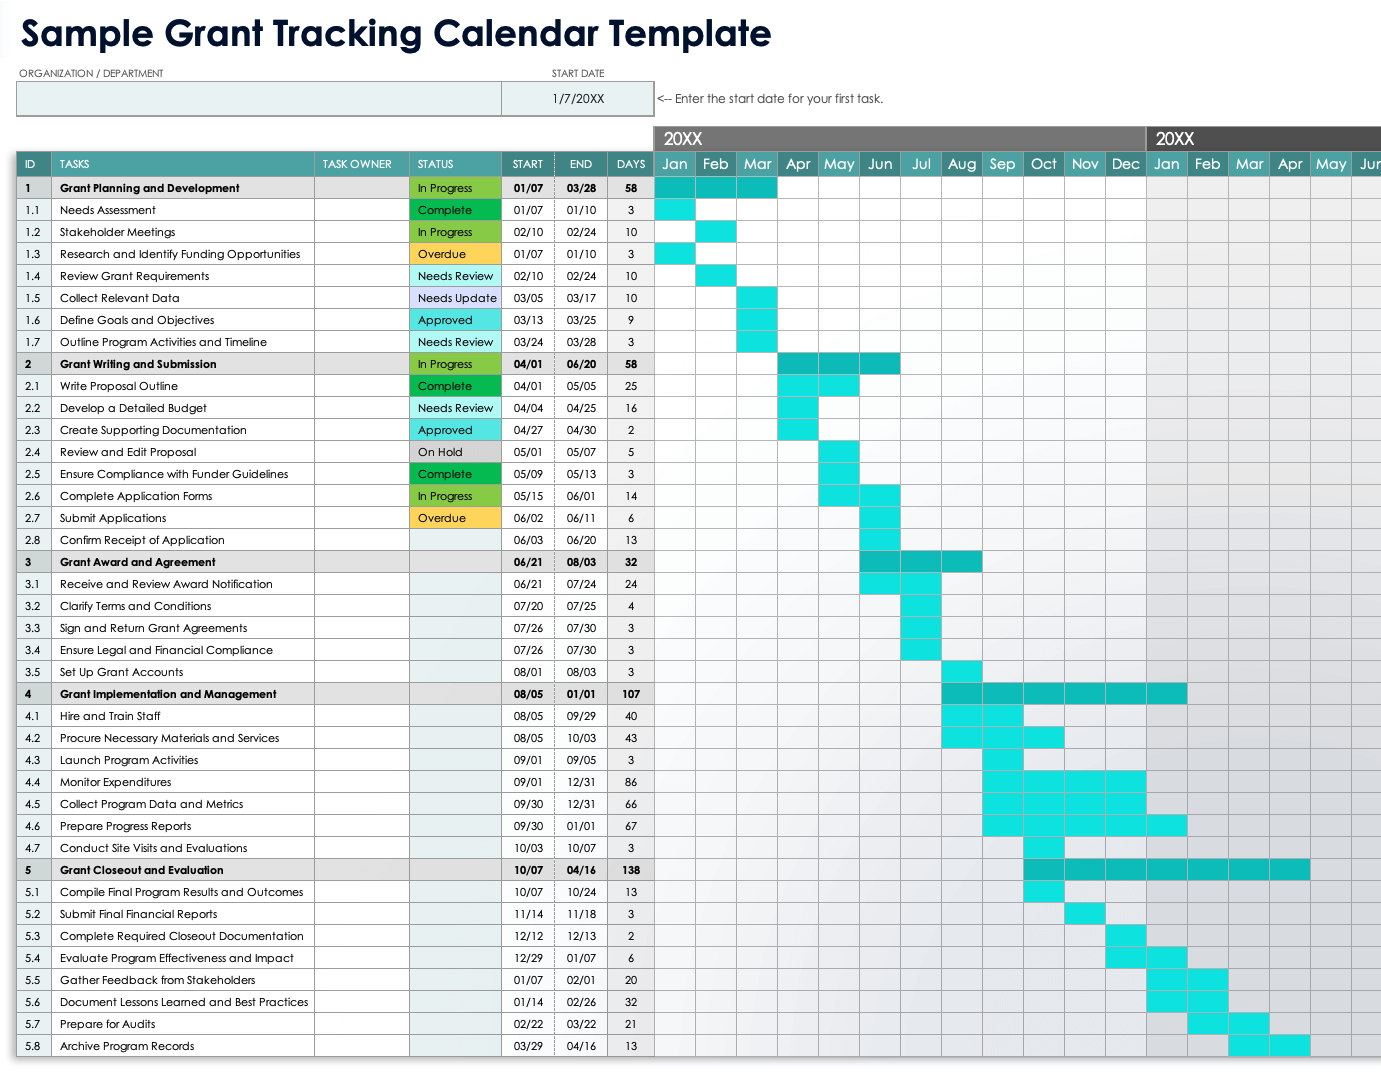 Grant tracking calendar template